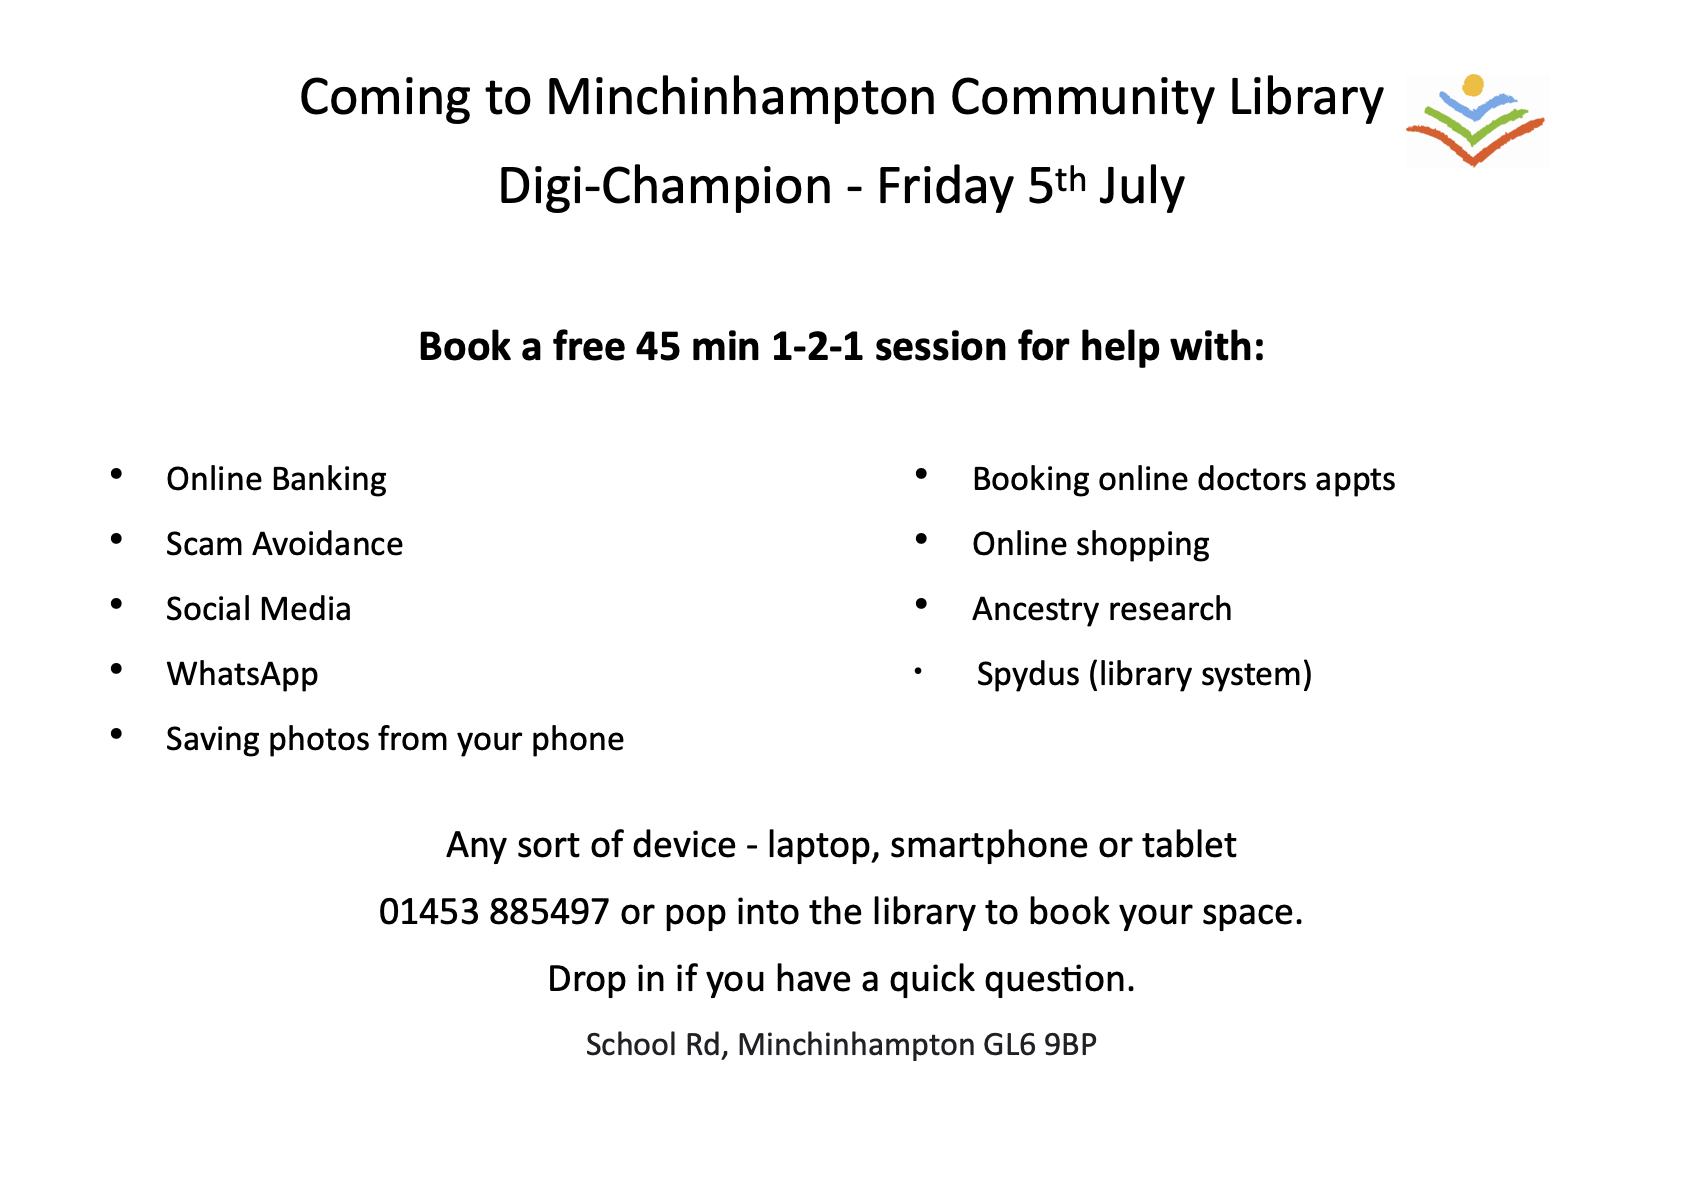 Digi-Champion visit – help with digital technology